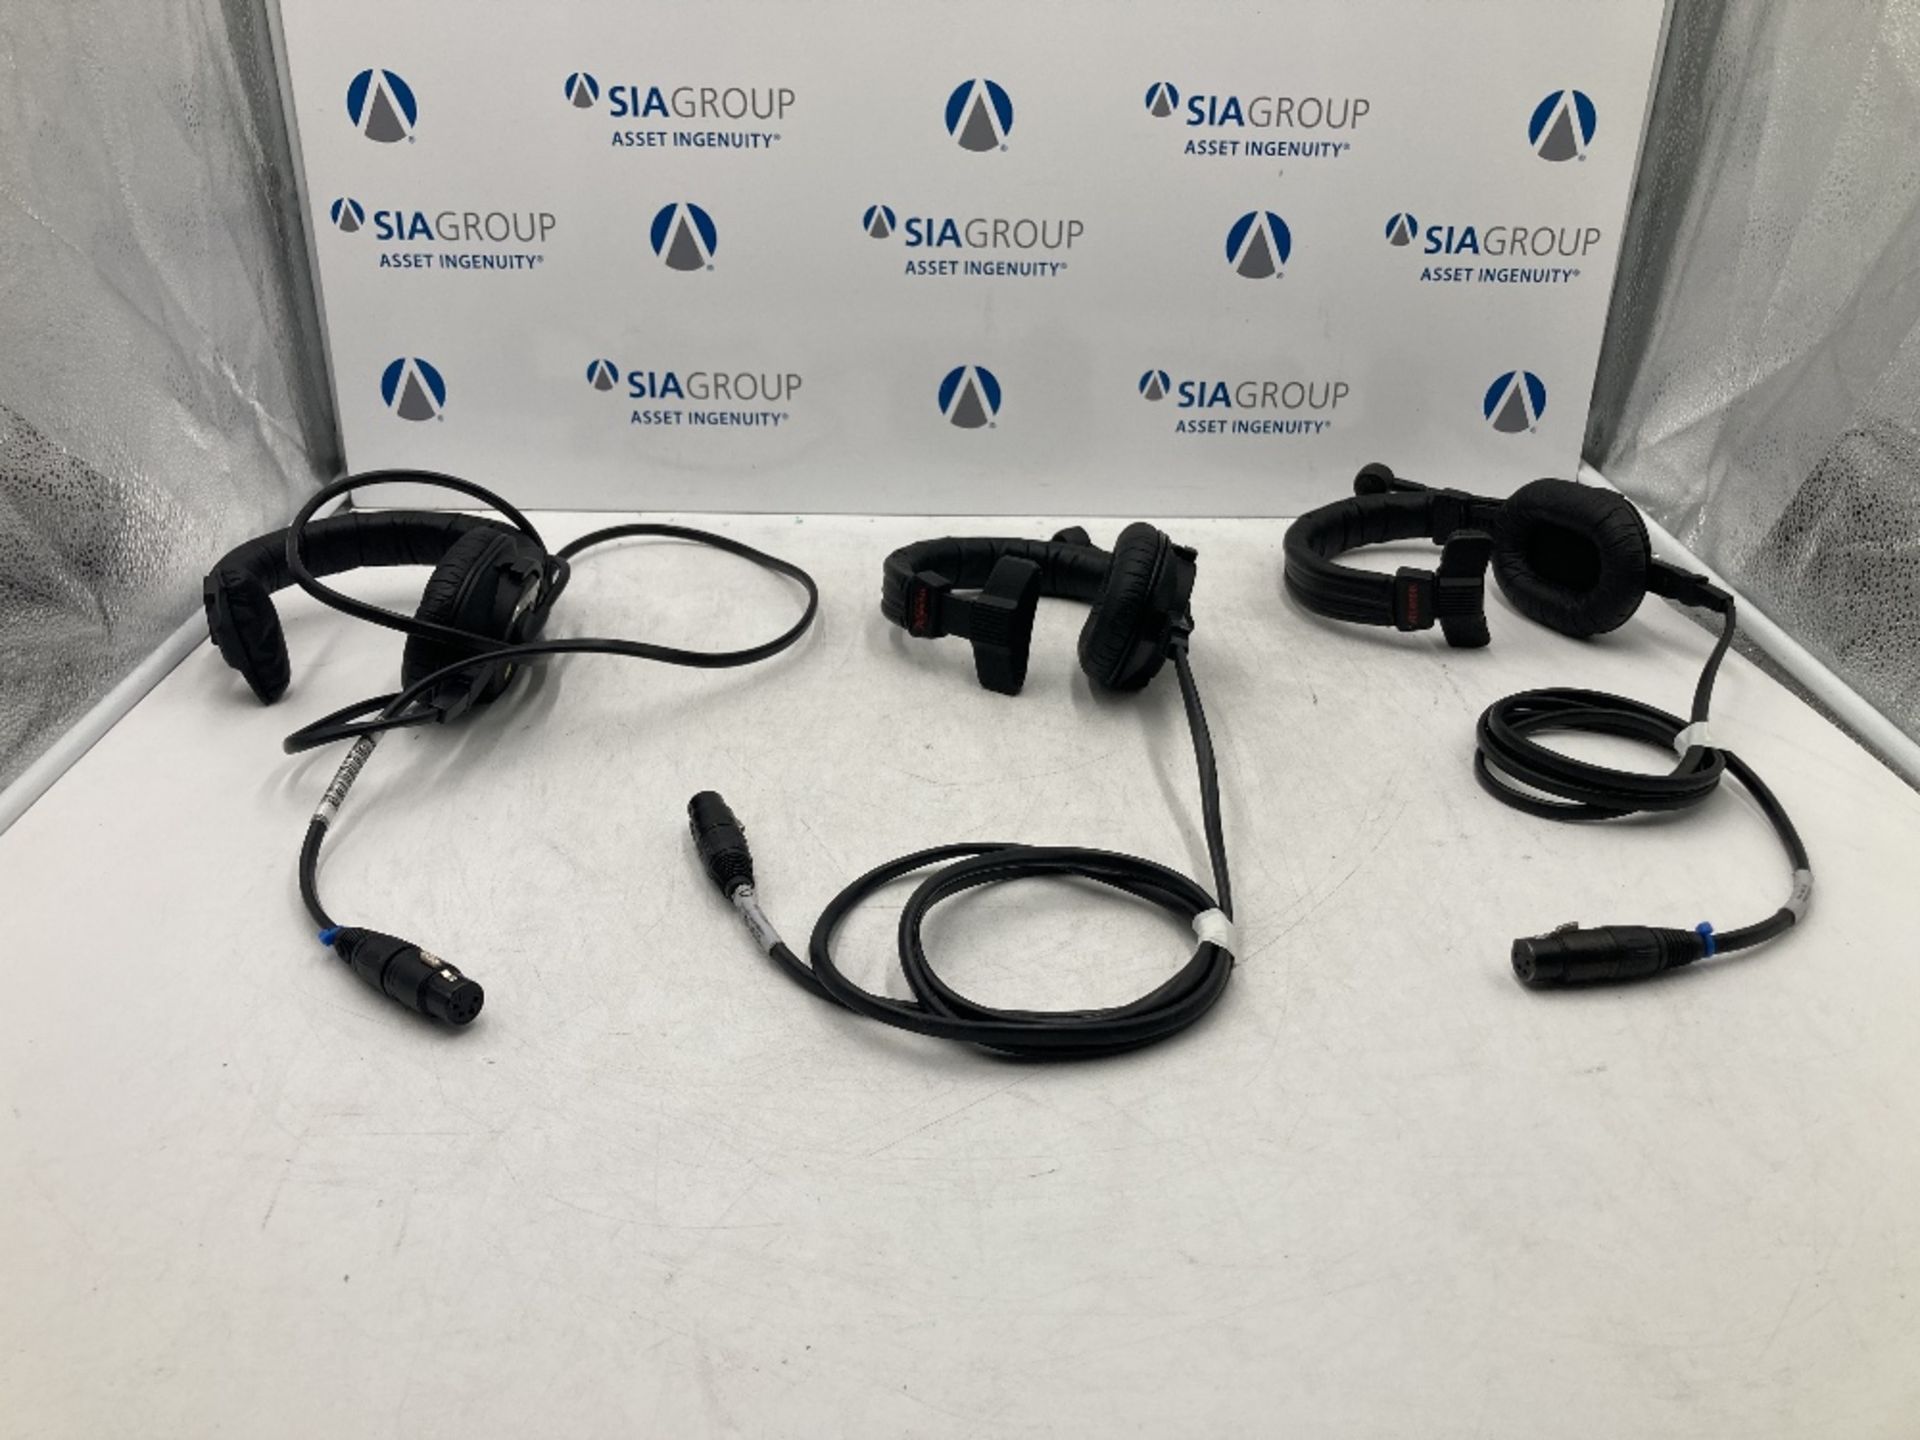 Various Riedel Beltpacks, Headphones & Accessories To Include - Image 5 of 10